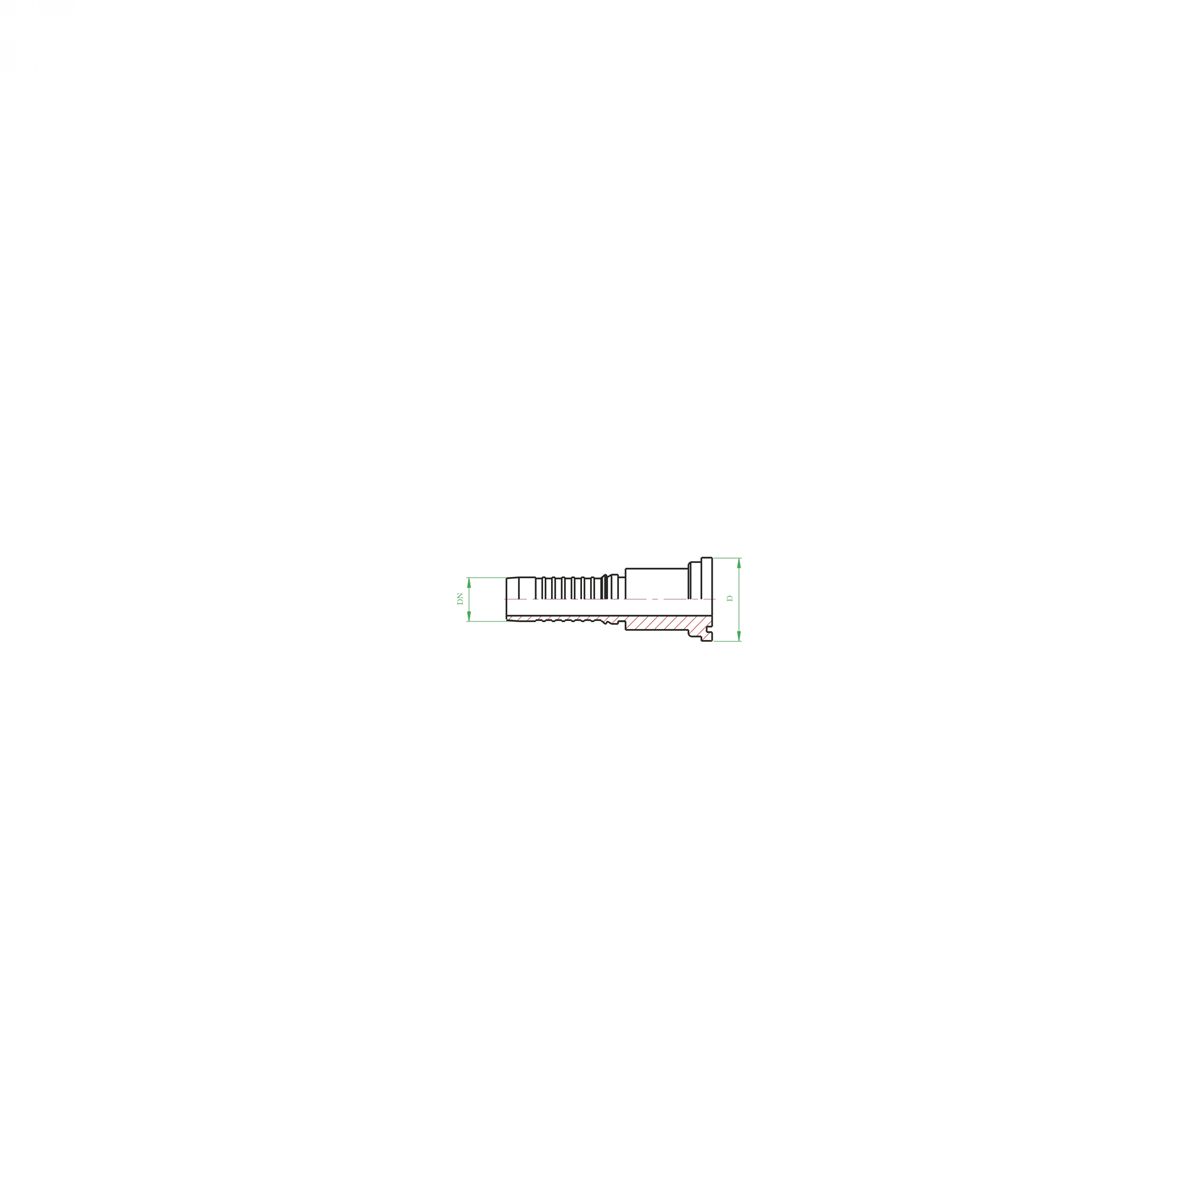 SFL ( P20 / P1 ) Priključci za visokotlačna hidraulička crijeva prema EN 856 4SH (INTERLOCK)